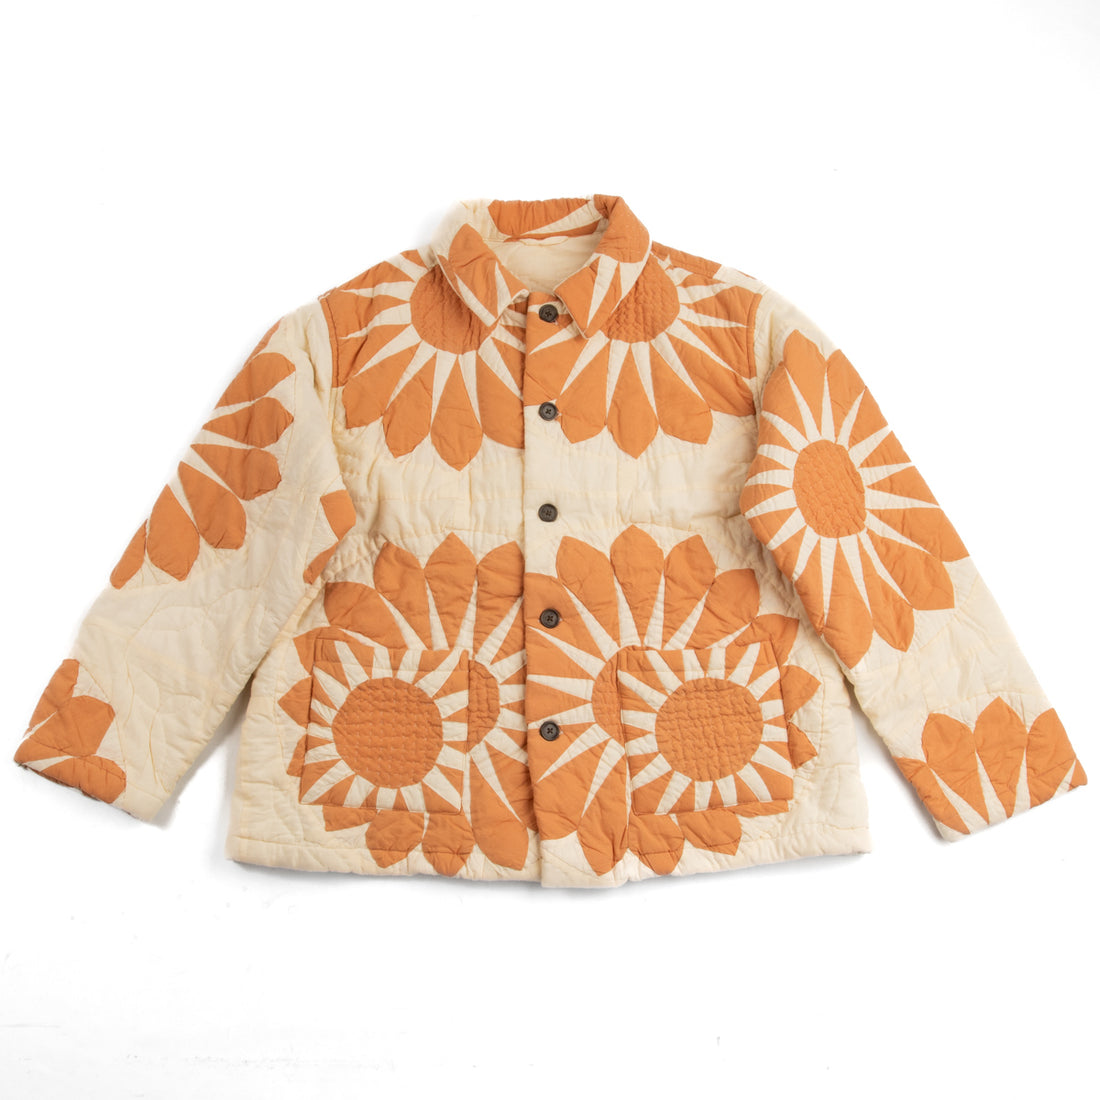 Bode Grand Daisy Workwear Jacket - Orange Multi - Standard & Strange